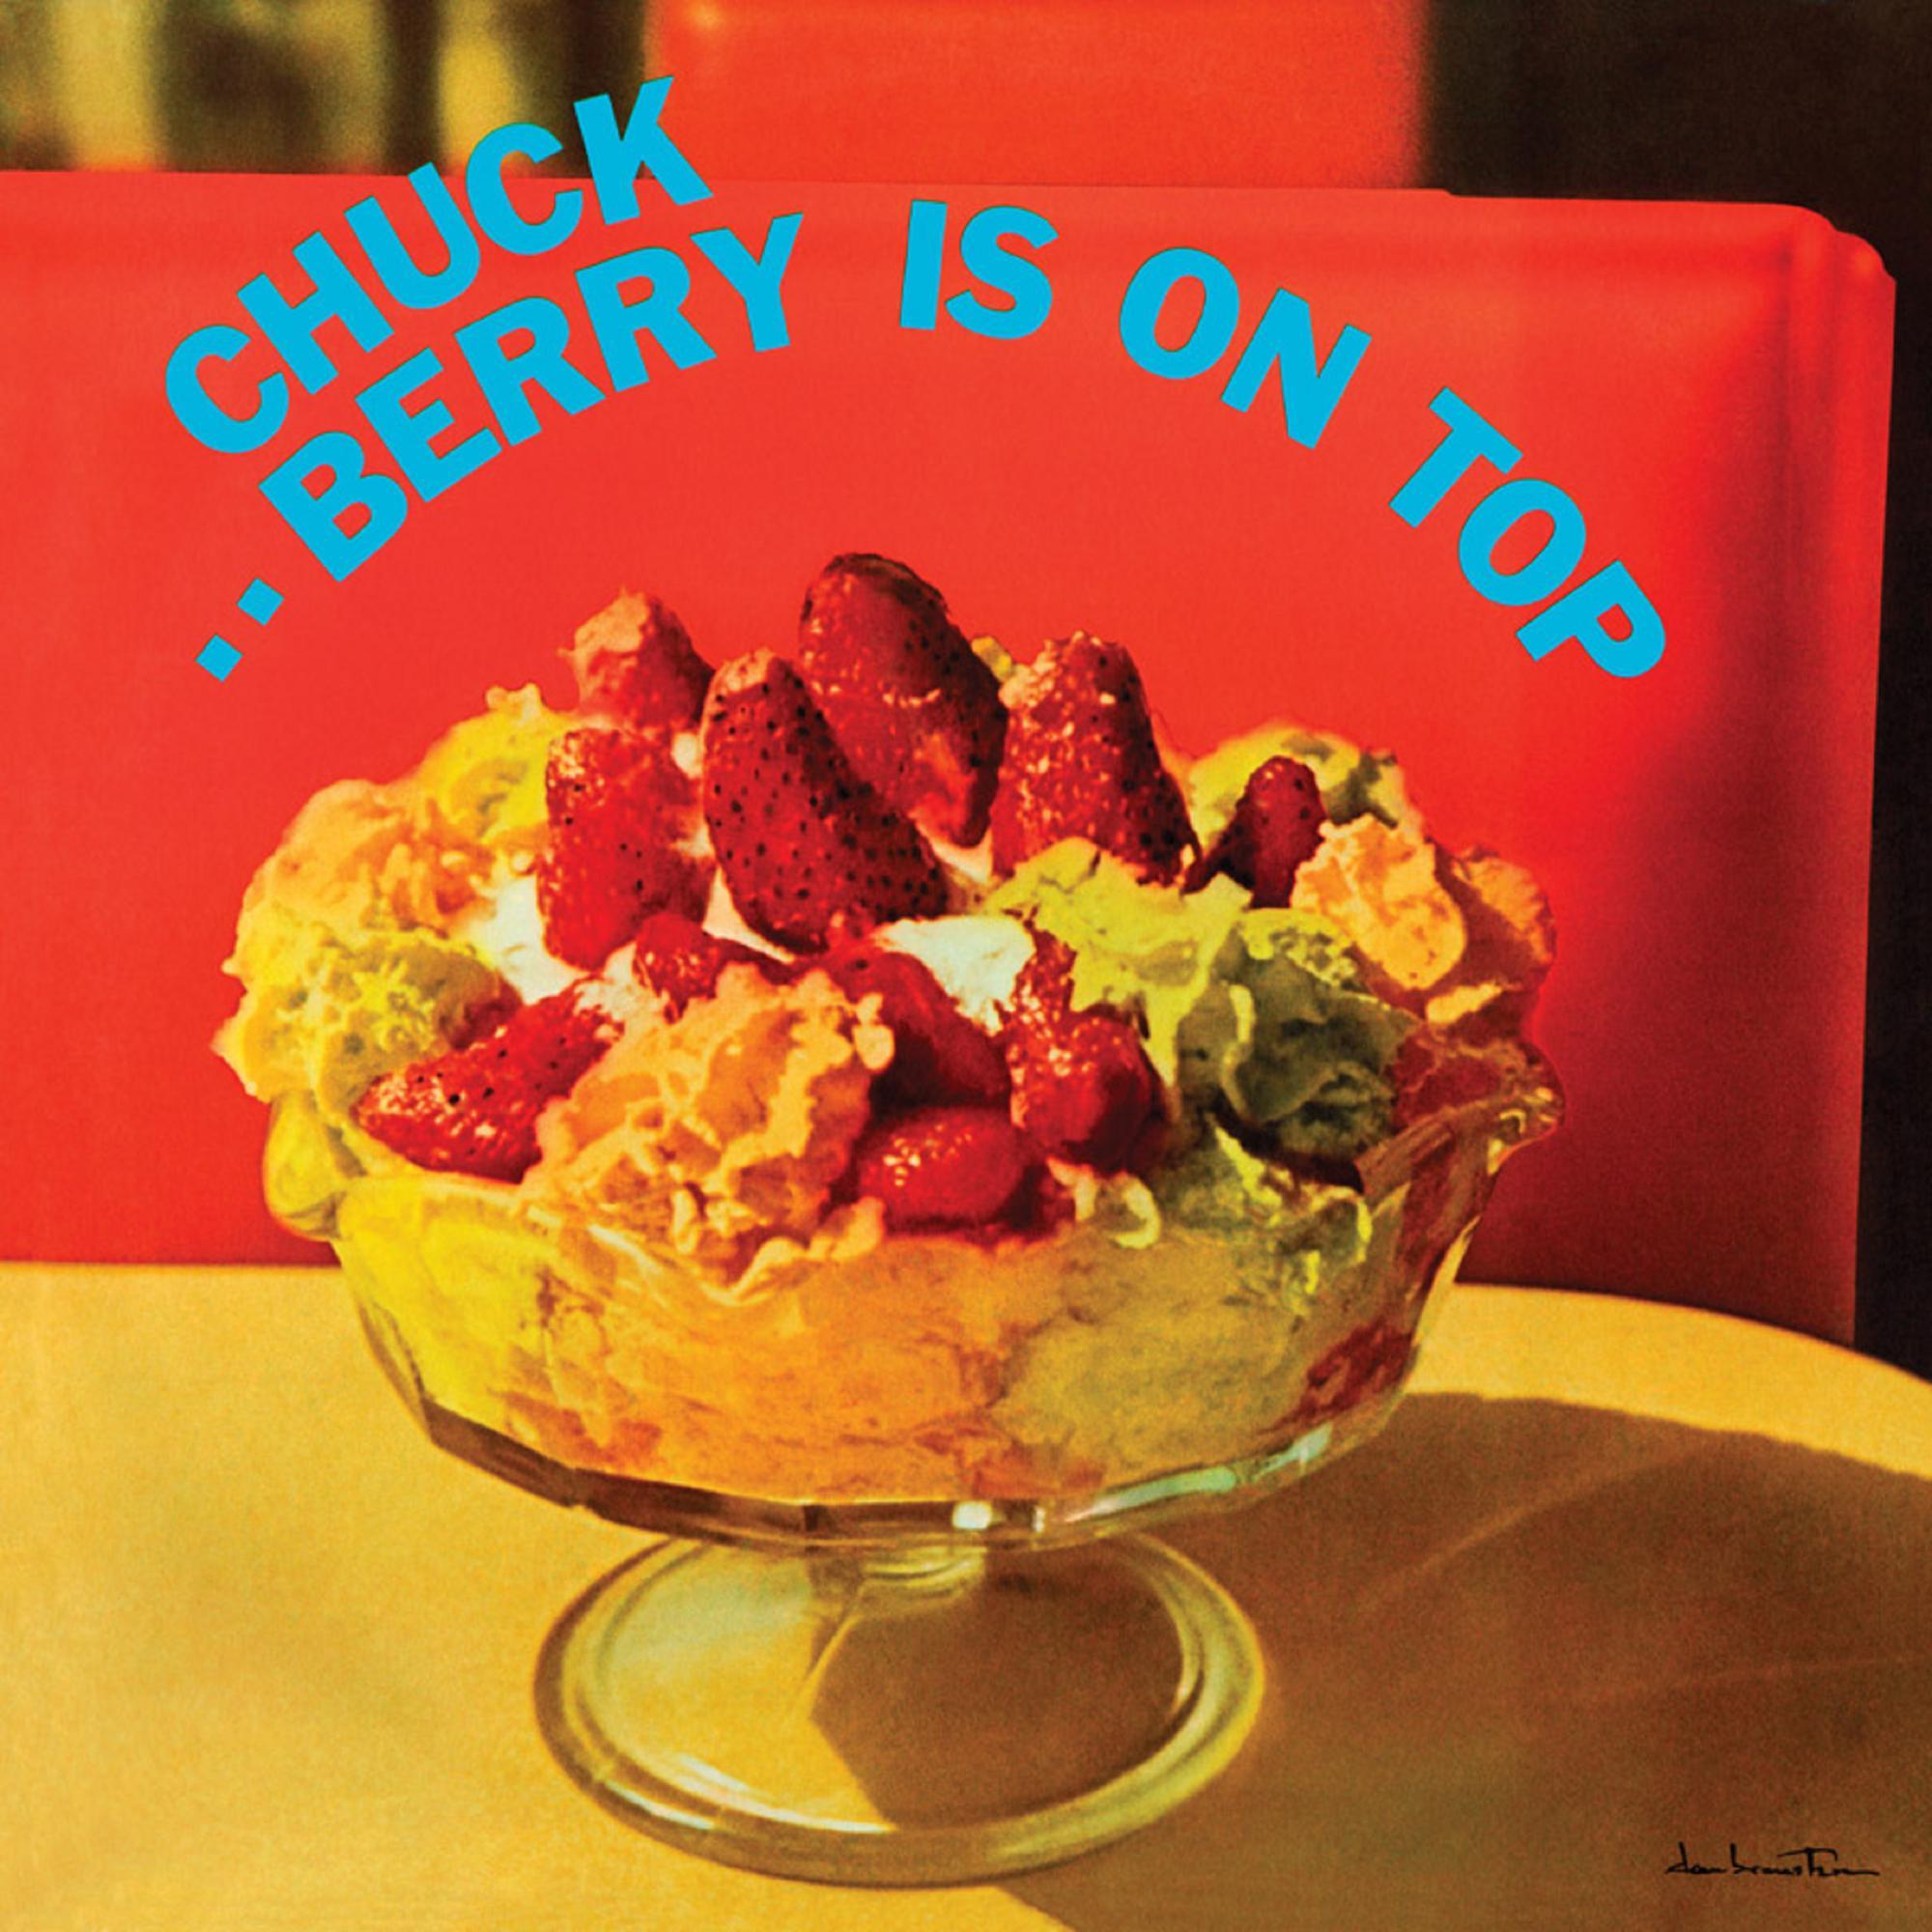 CHUCK BERRY 'BERRY IS ON TOP' LP 180 GRAM (Red Vinyl)